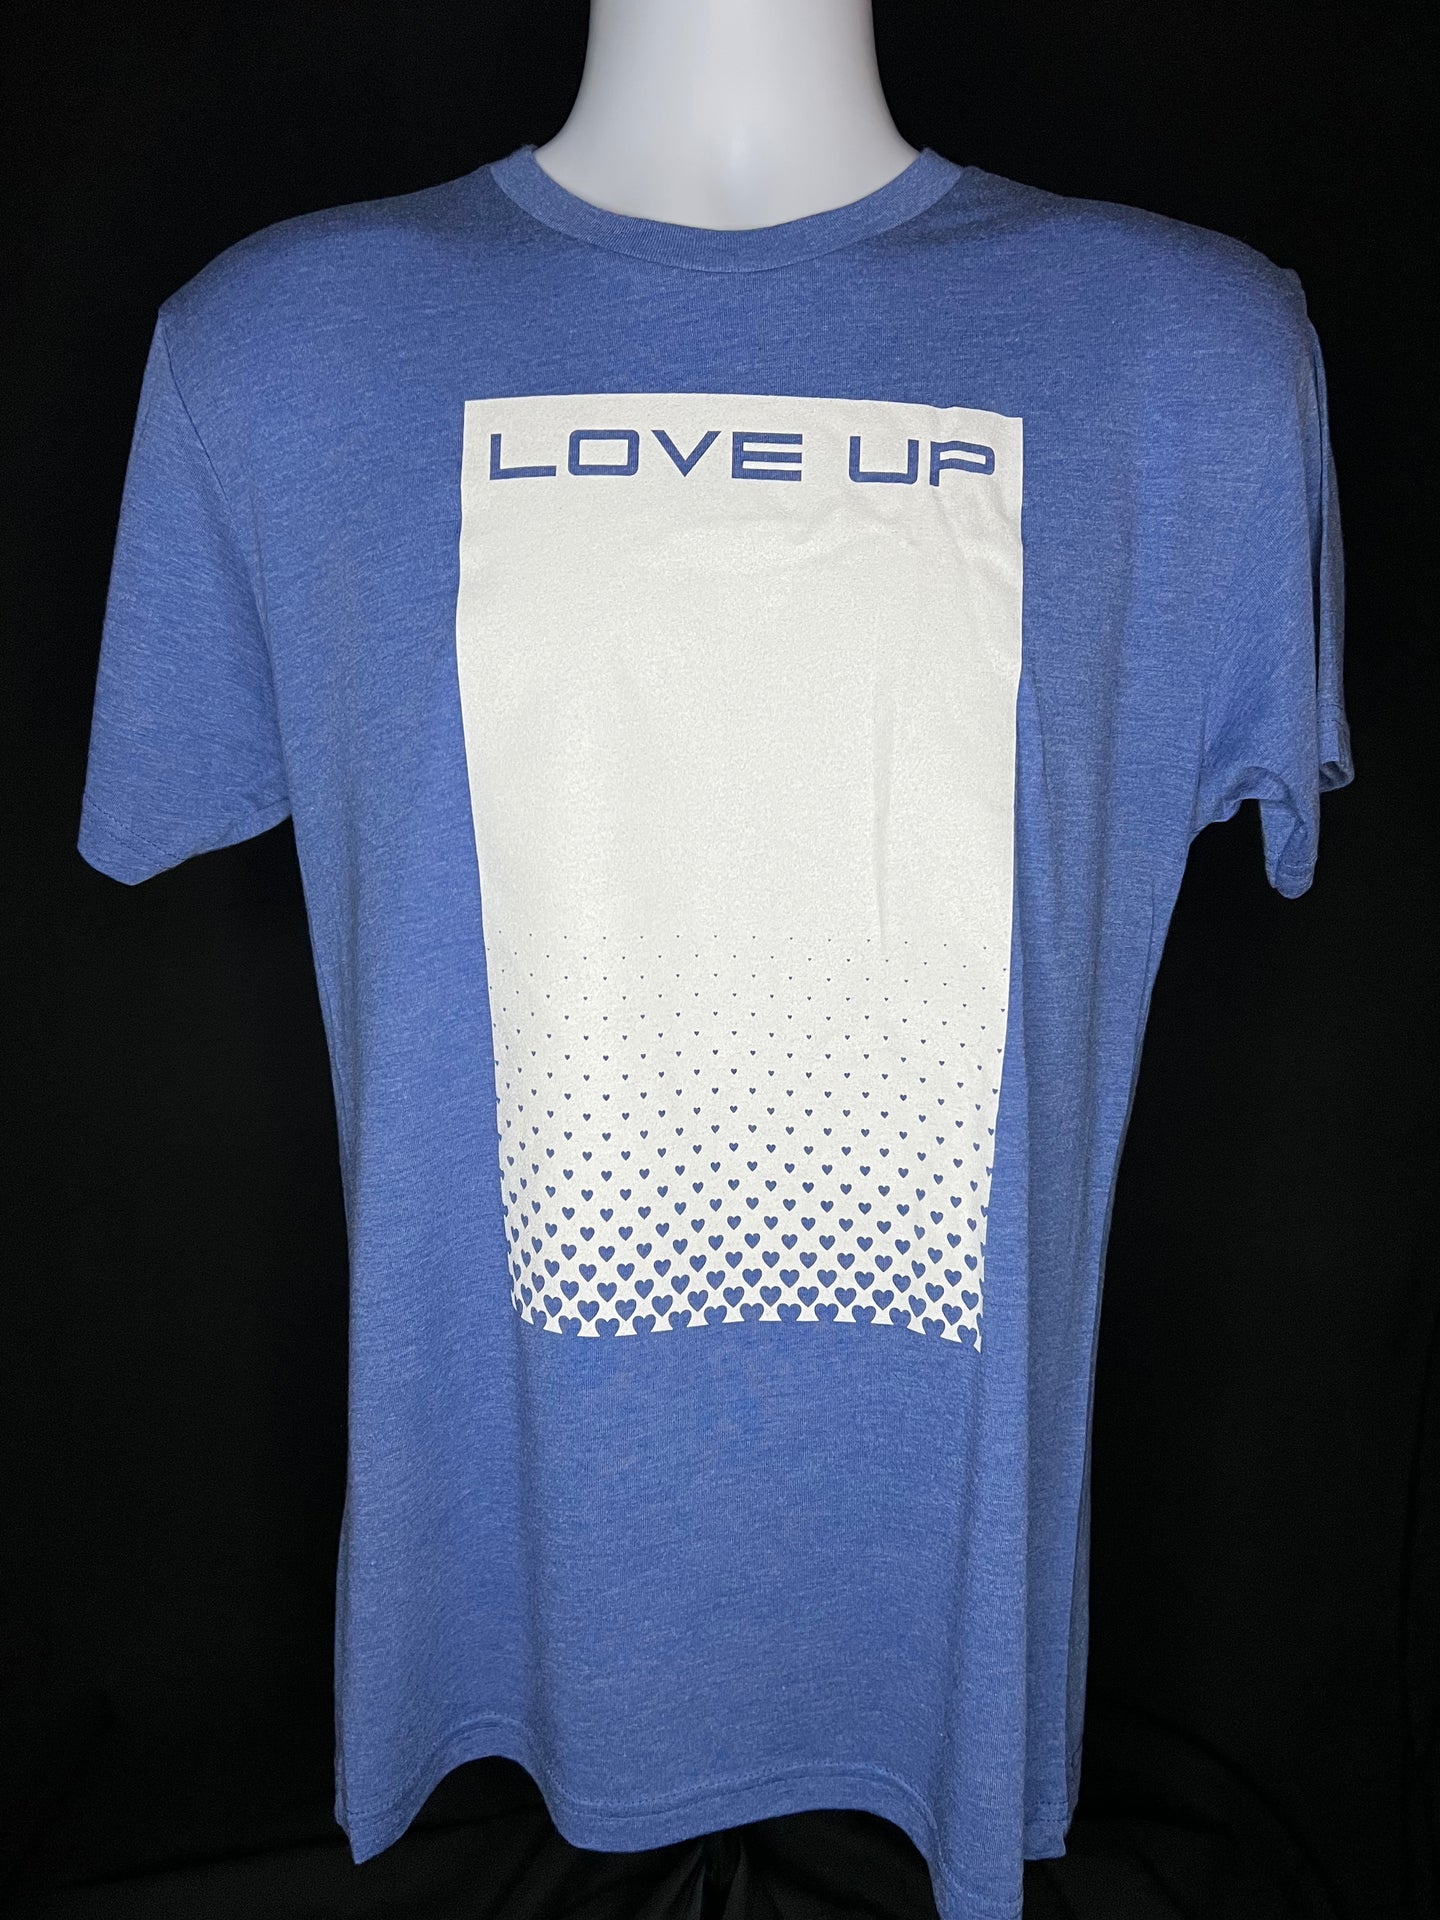 Love Up - Royal Blue Tri-Blend T-Shirt (Men's/Women's)